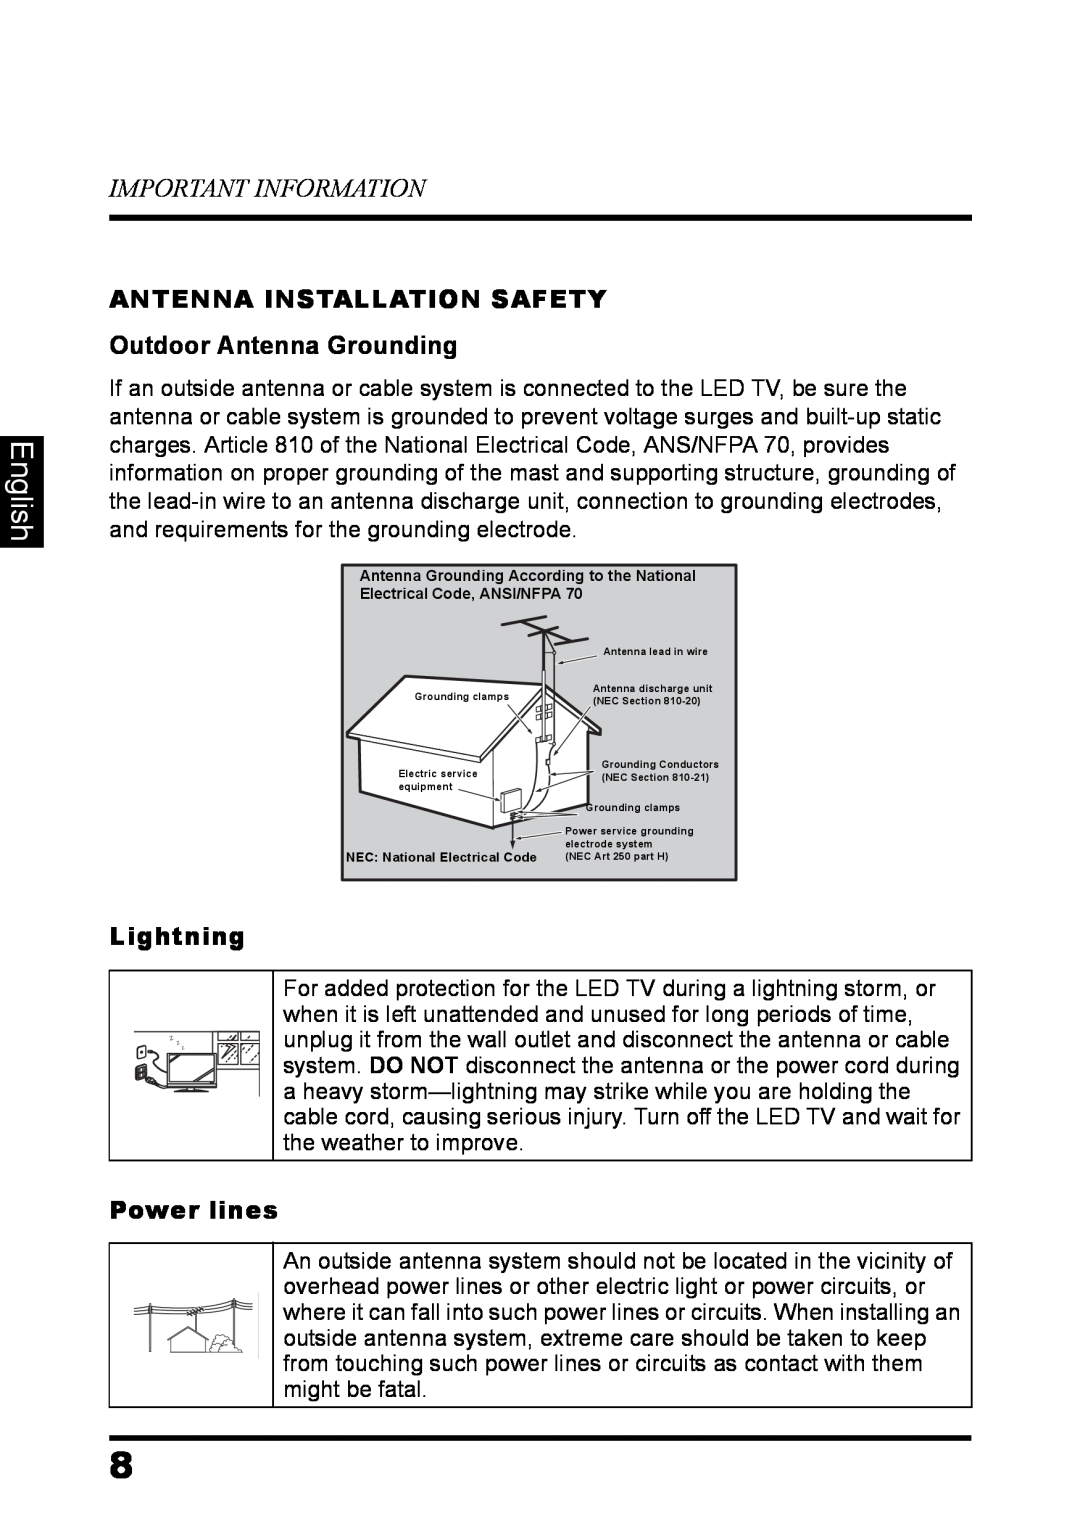 Westinghouse LD-3237 English, Important Information, ANTENNA INSTALLATION SAFETY Outdoor Antenna Grounding, Lightning 